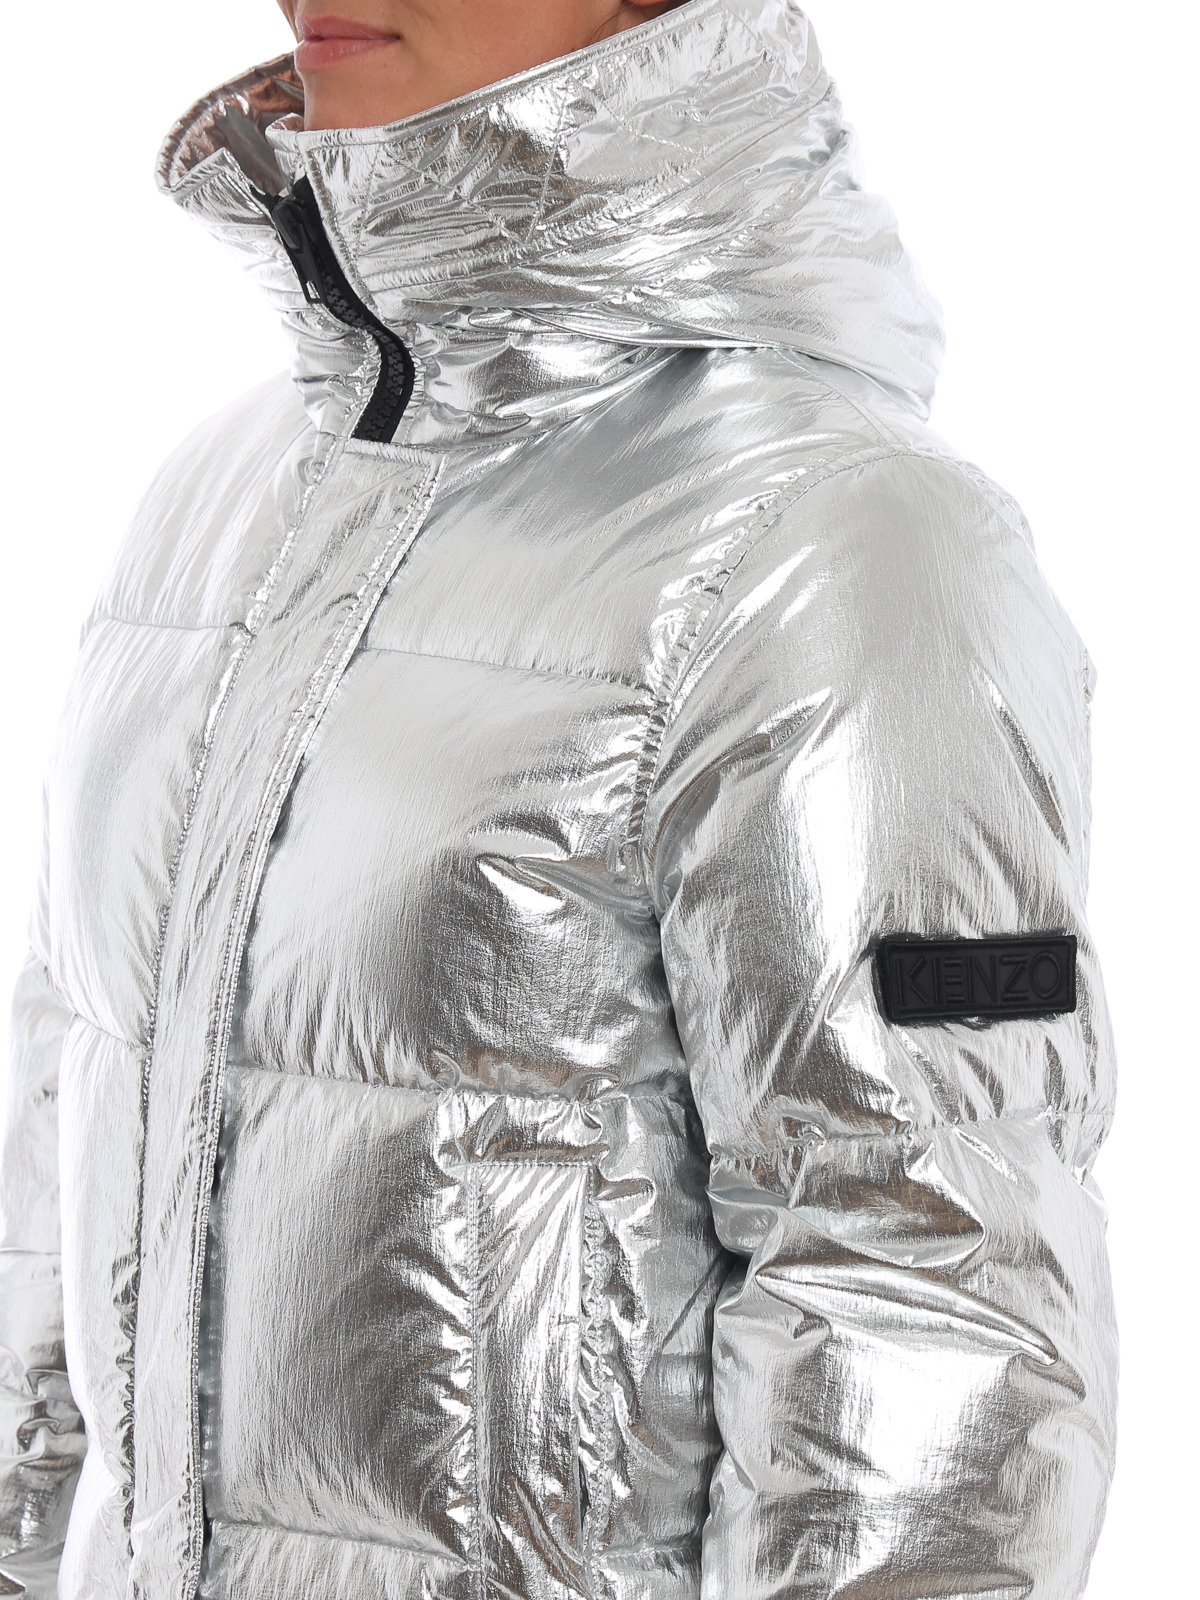 kenzo silver puffer jacket